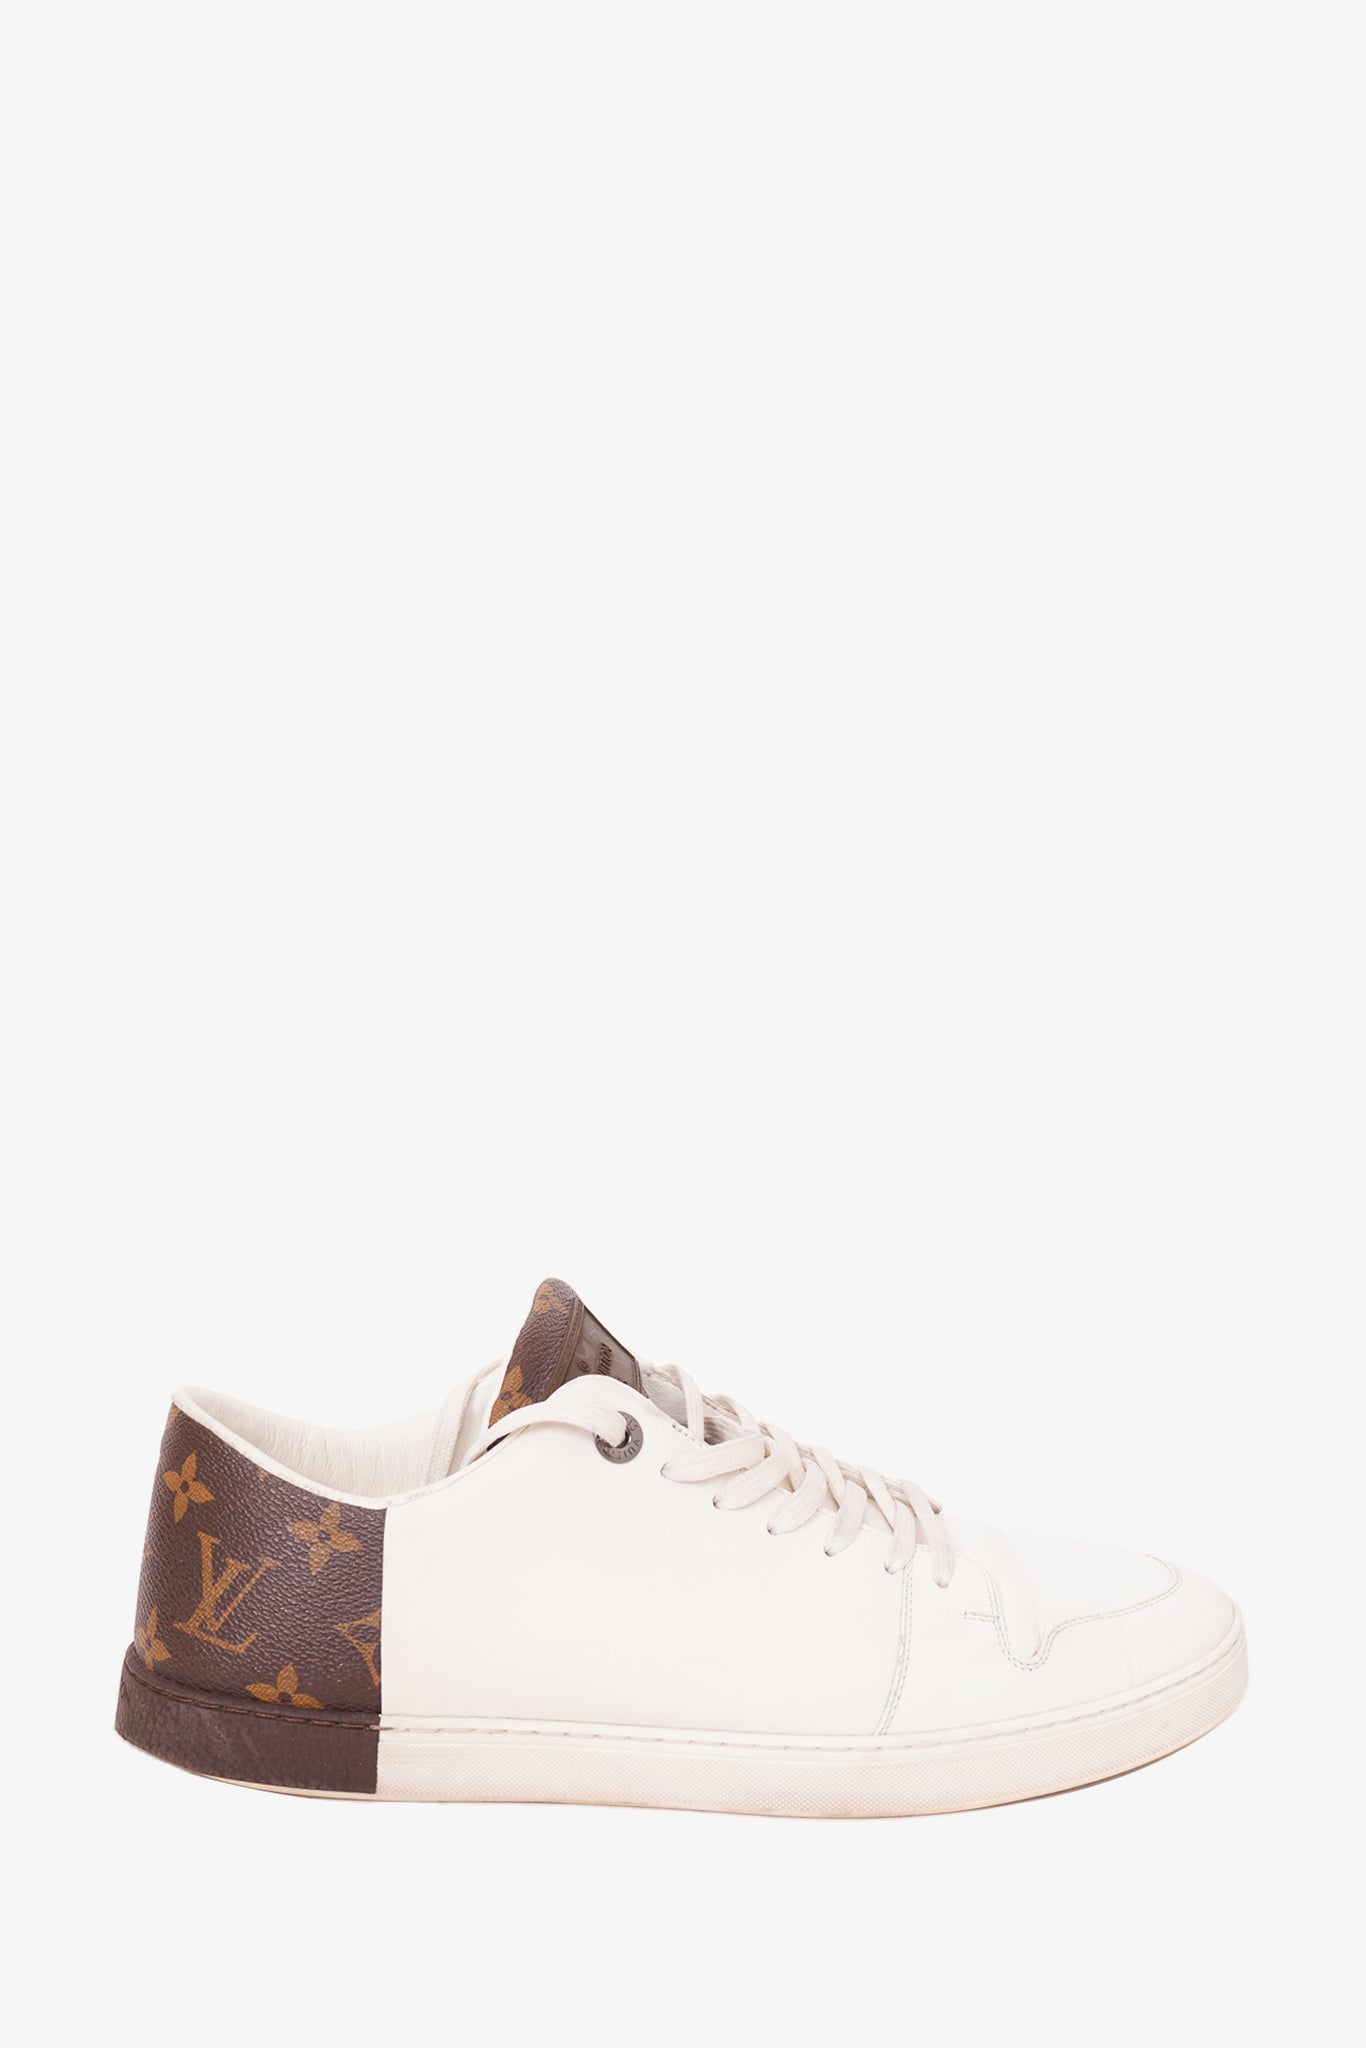 Louis Vuitton Damier Ebene High Top Rivoli Sneakers sz 7 Mens – Mine & Yours